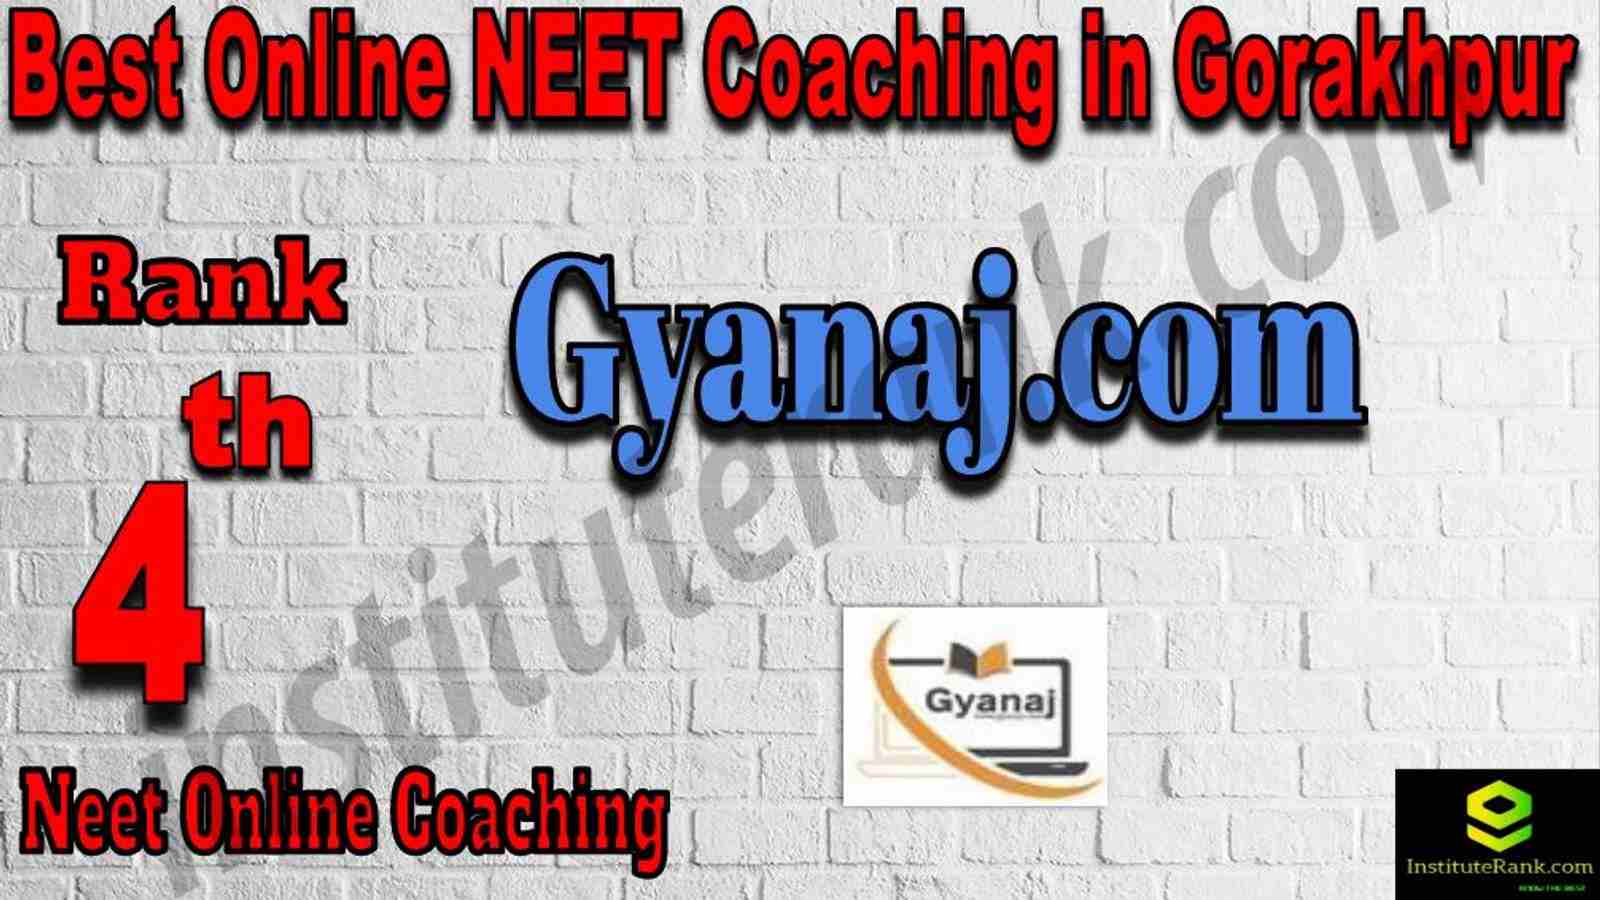 4th Best Online Neet Coaching in Gorakhpur